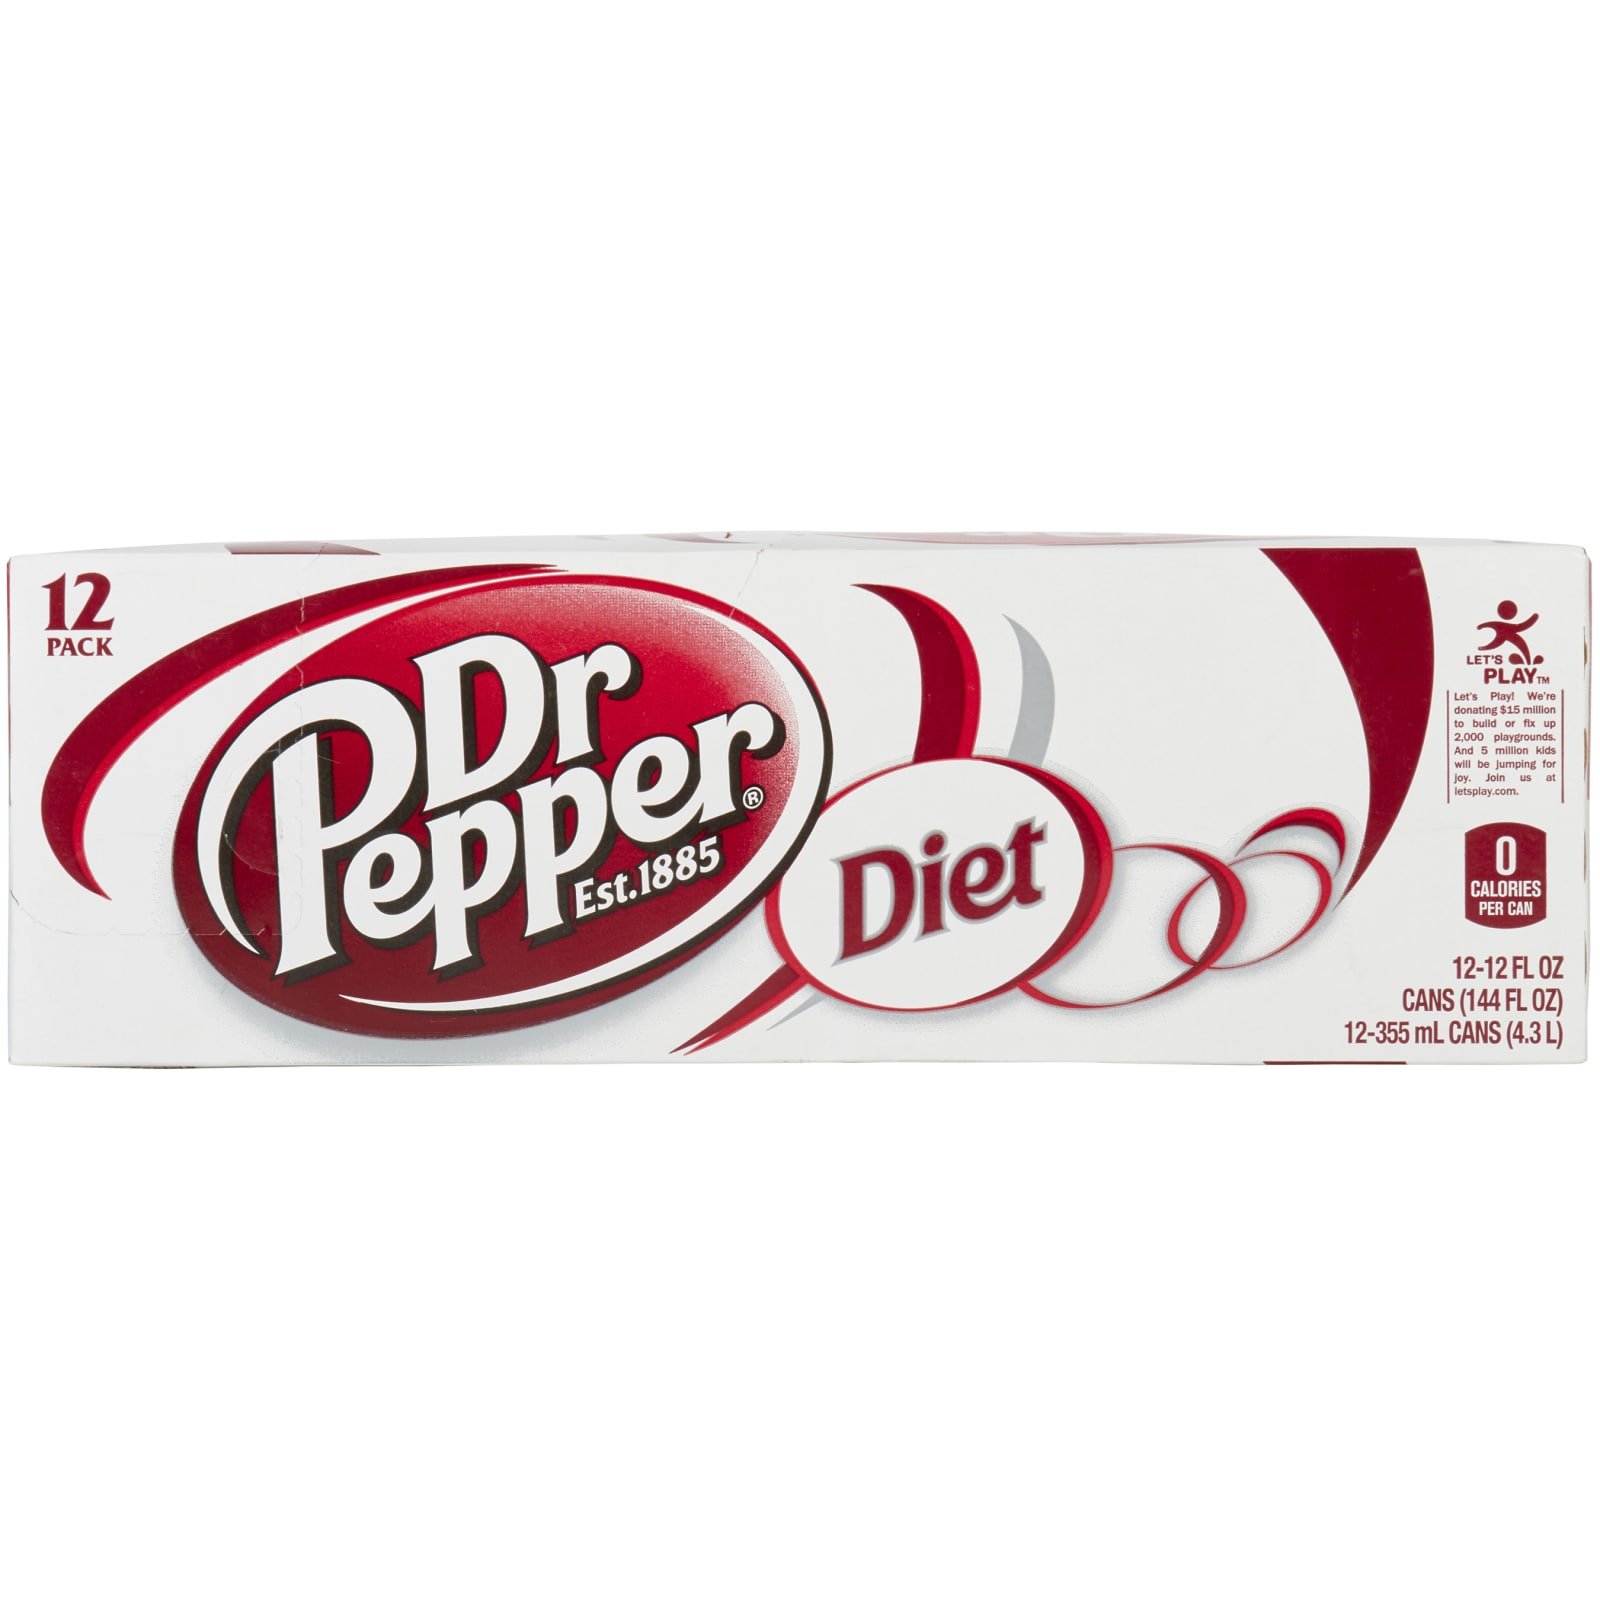 Diet Dr Pepper Soda, 12 fl oz cans (Pack of 12)